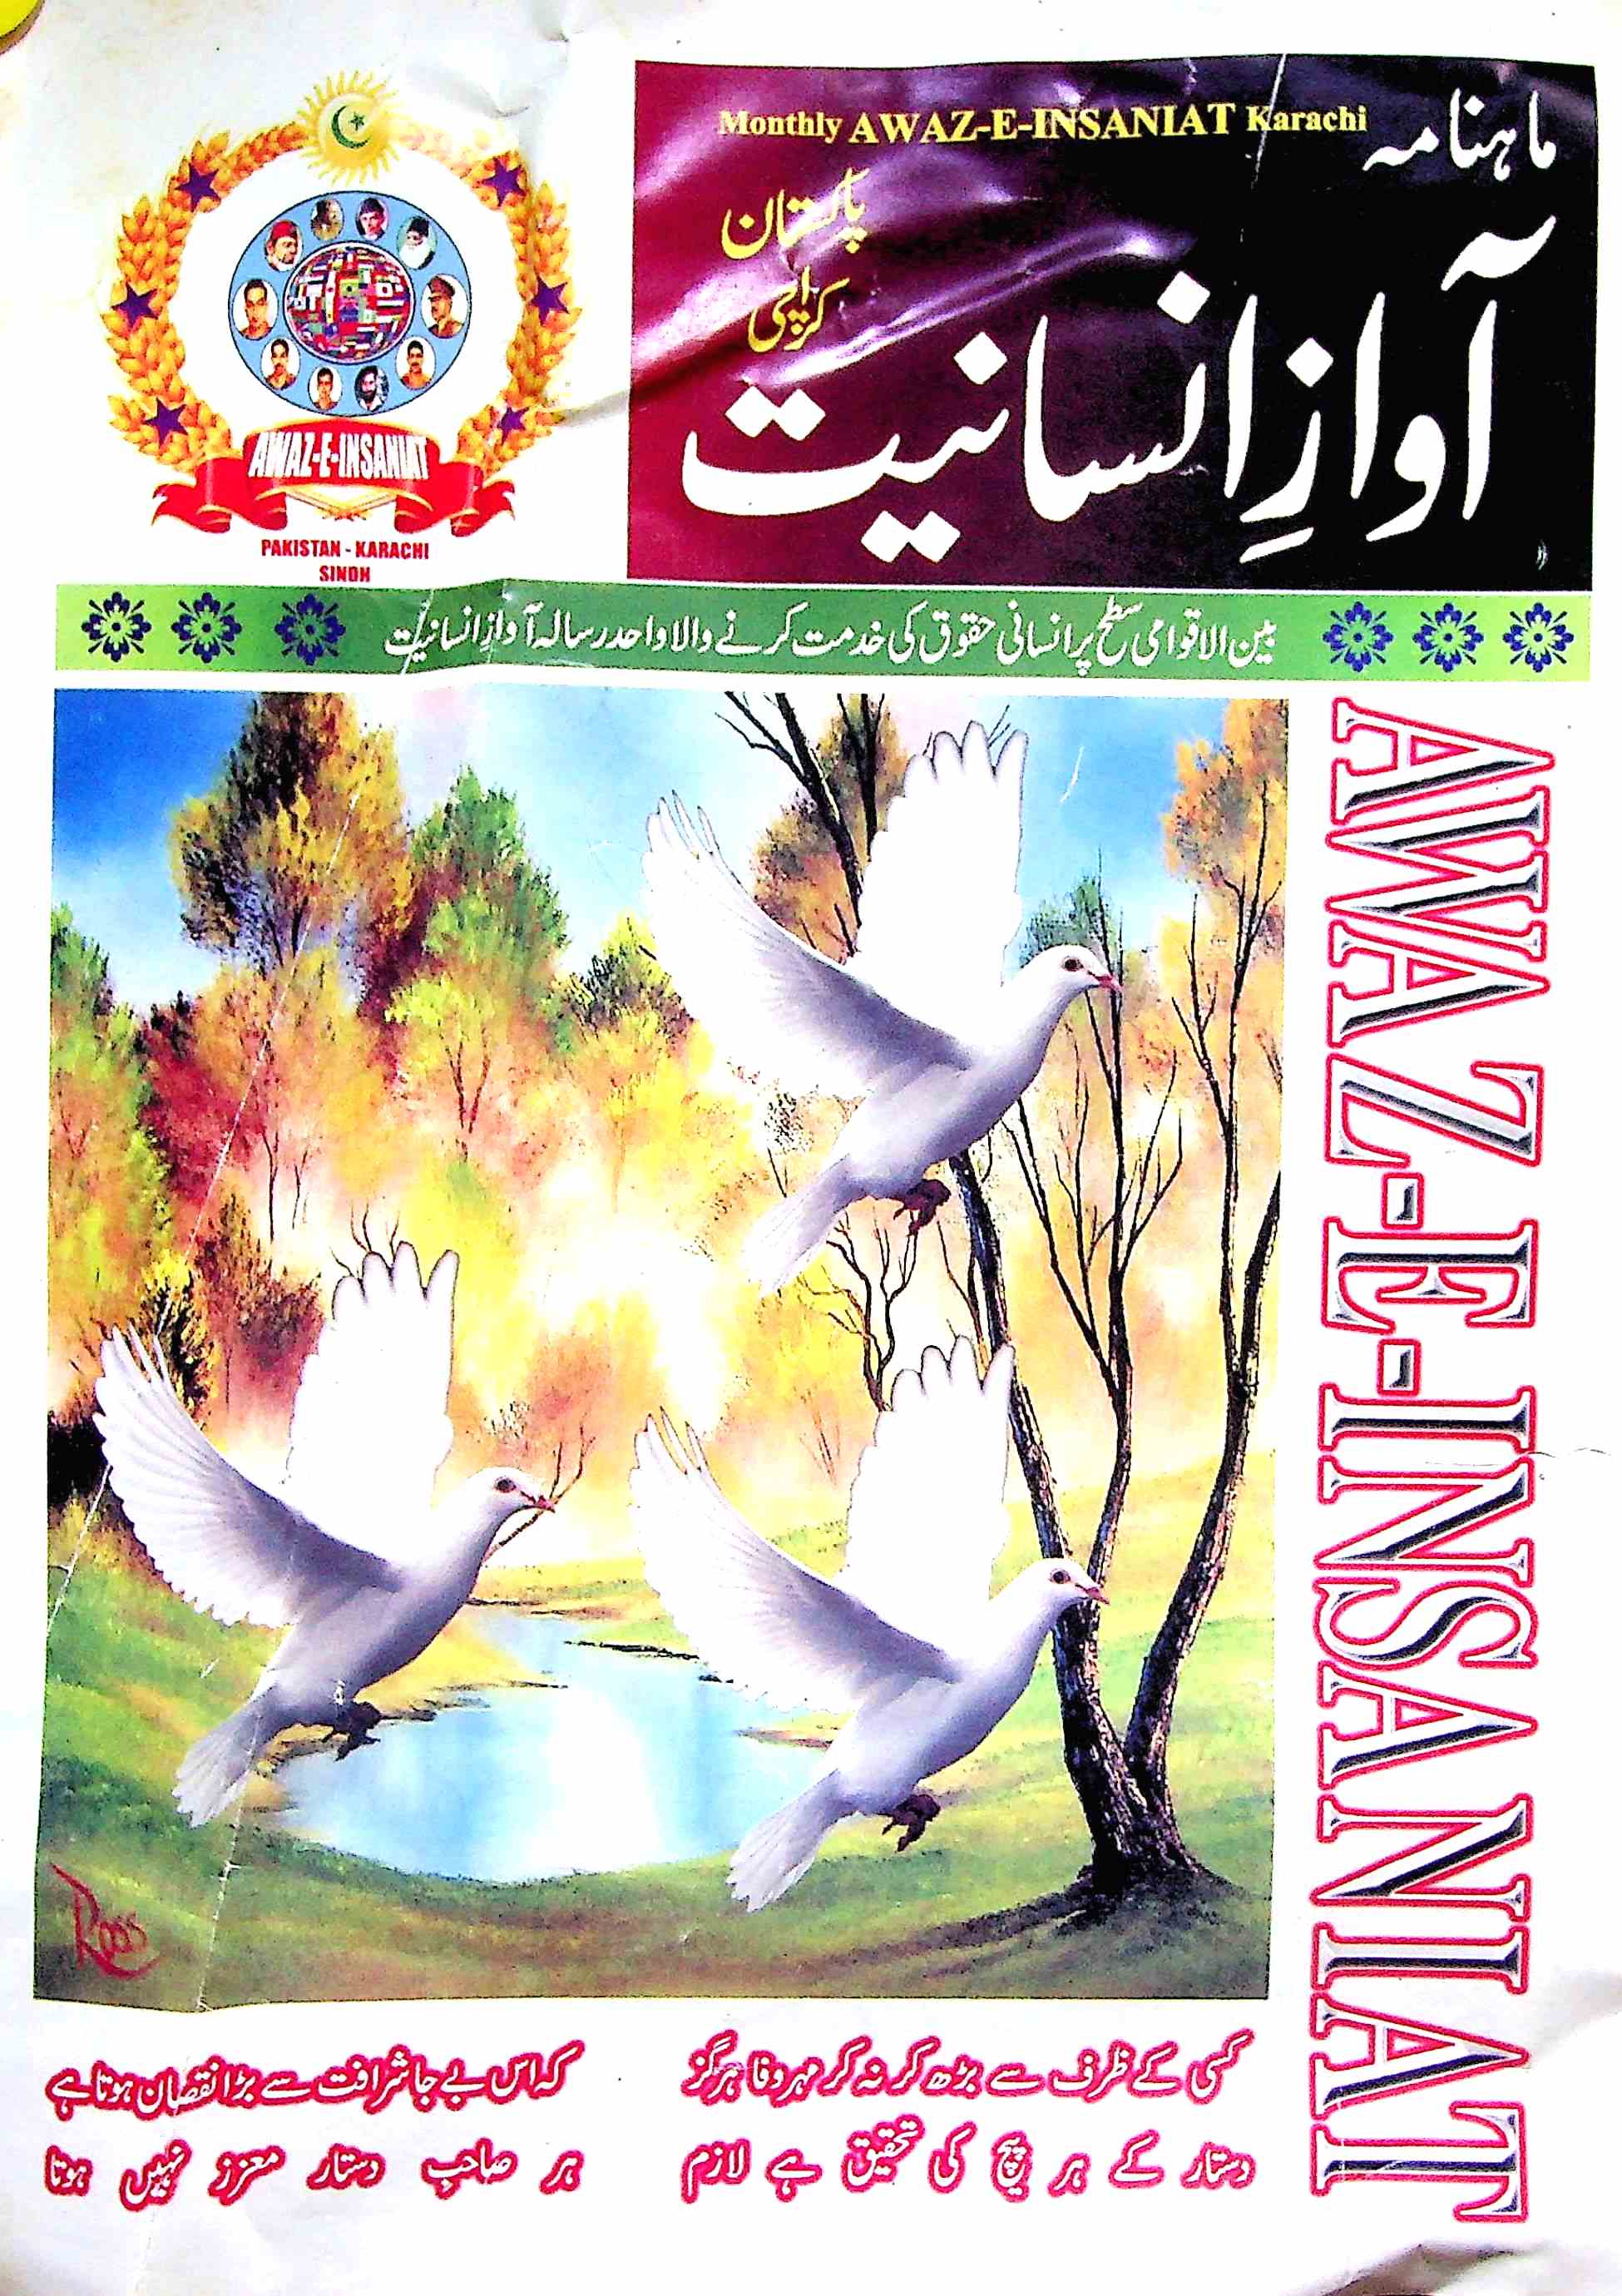 Awaz-E-Insaniyat Jild 11 Sep,Oct AV2K-Shumara Number-000